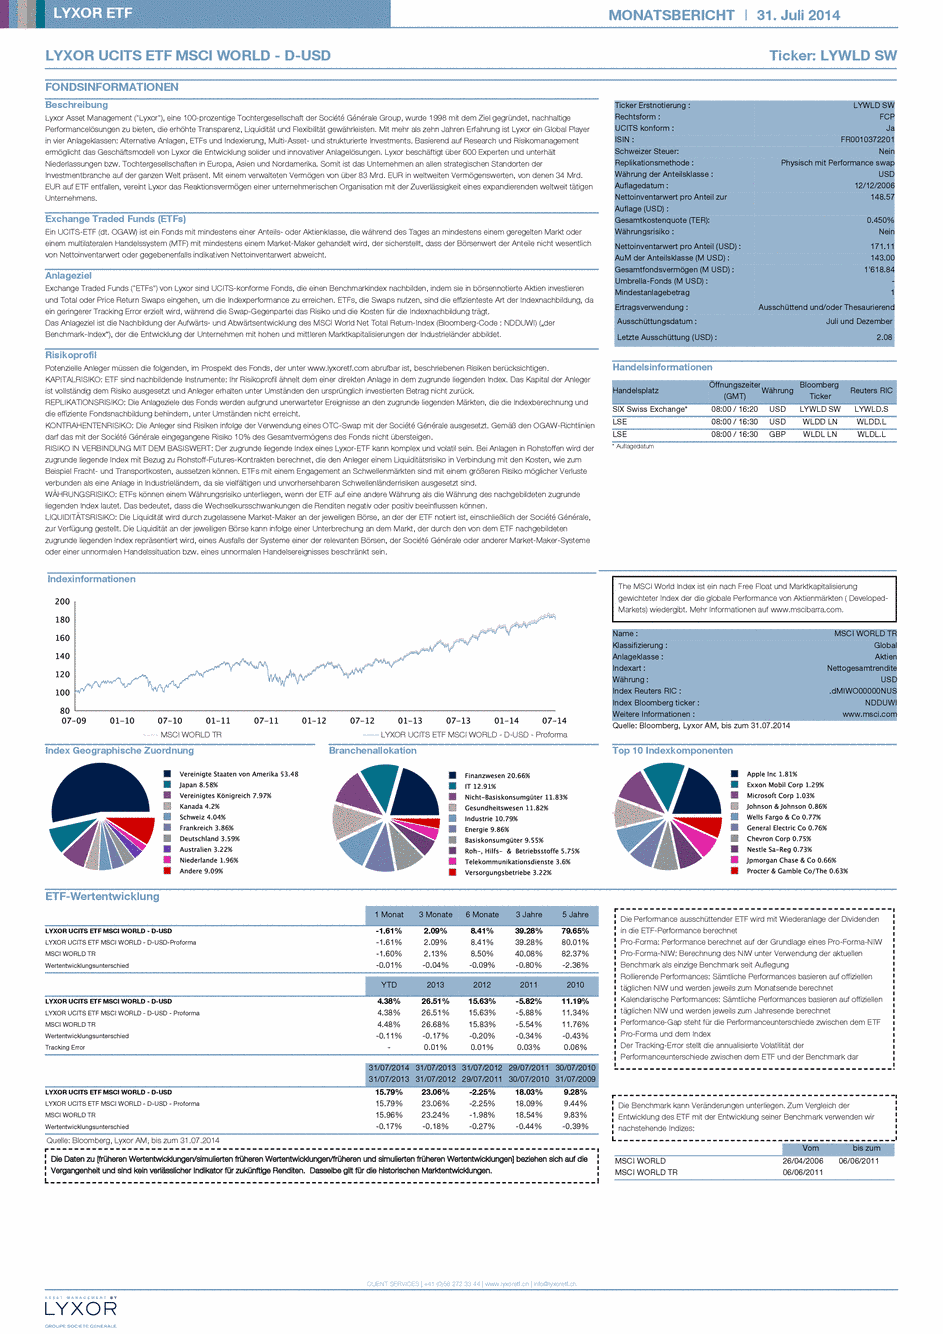 Reporting LYXOR UCITS ETF MSCI WORLD D-USD - 31/07/2014 - German